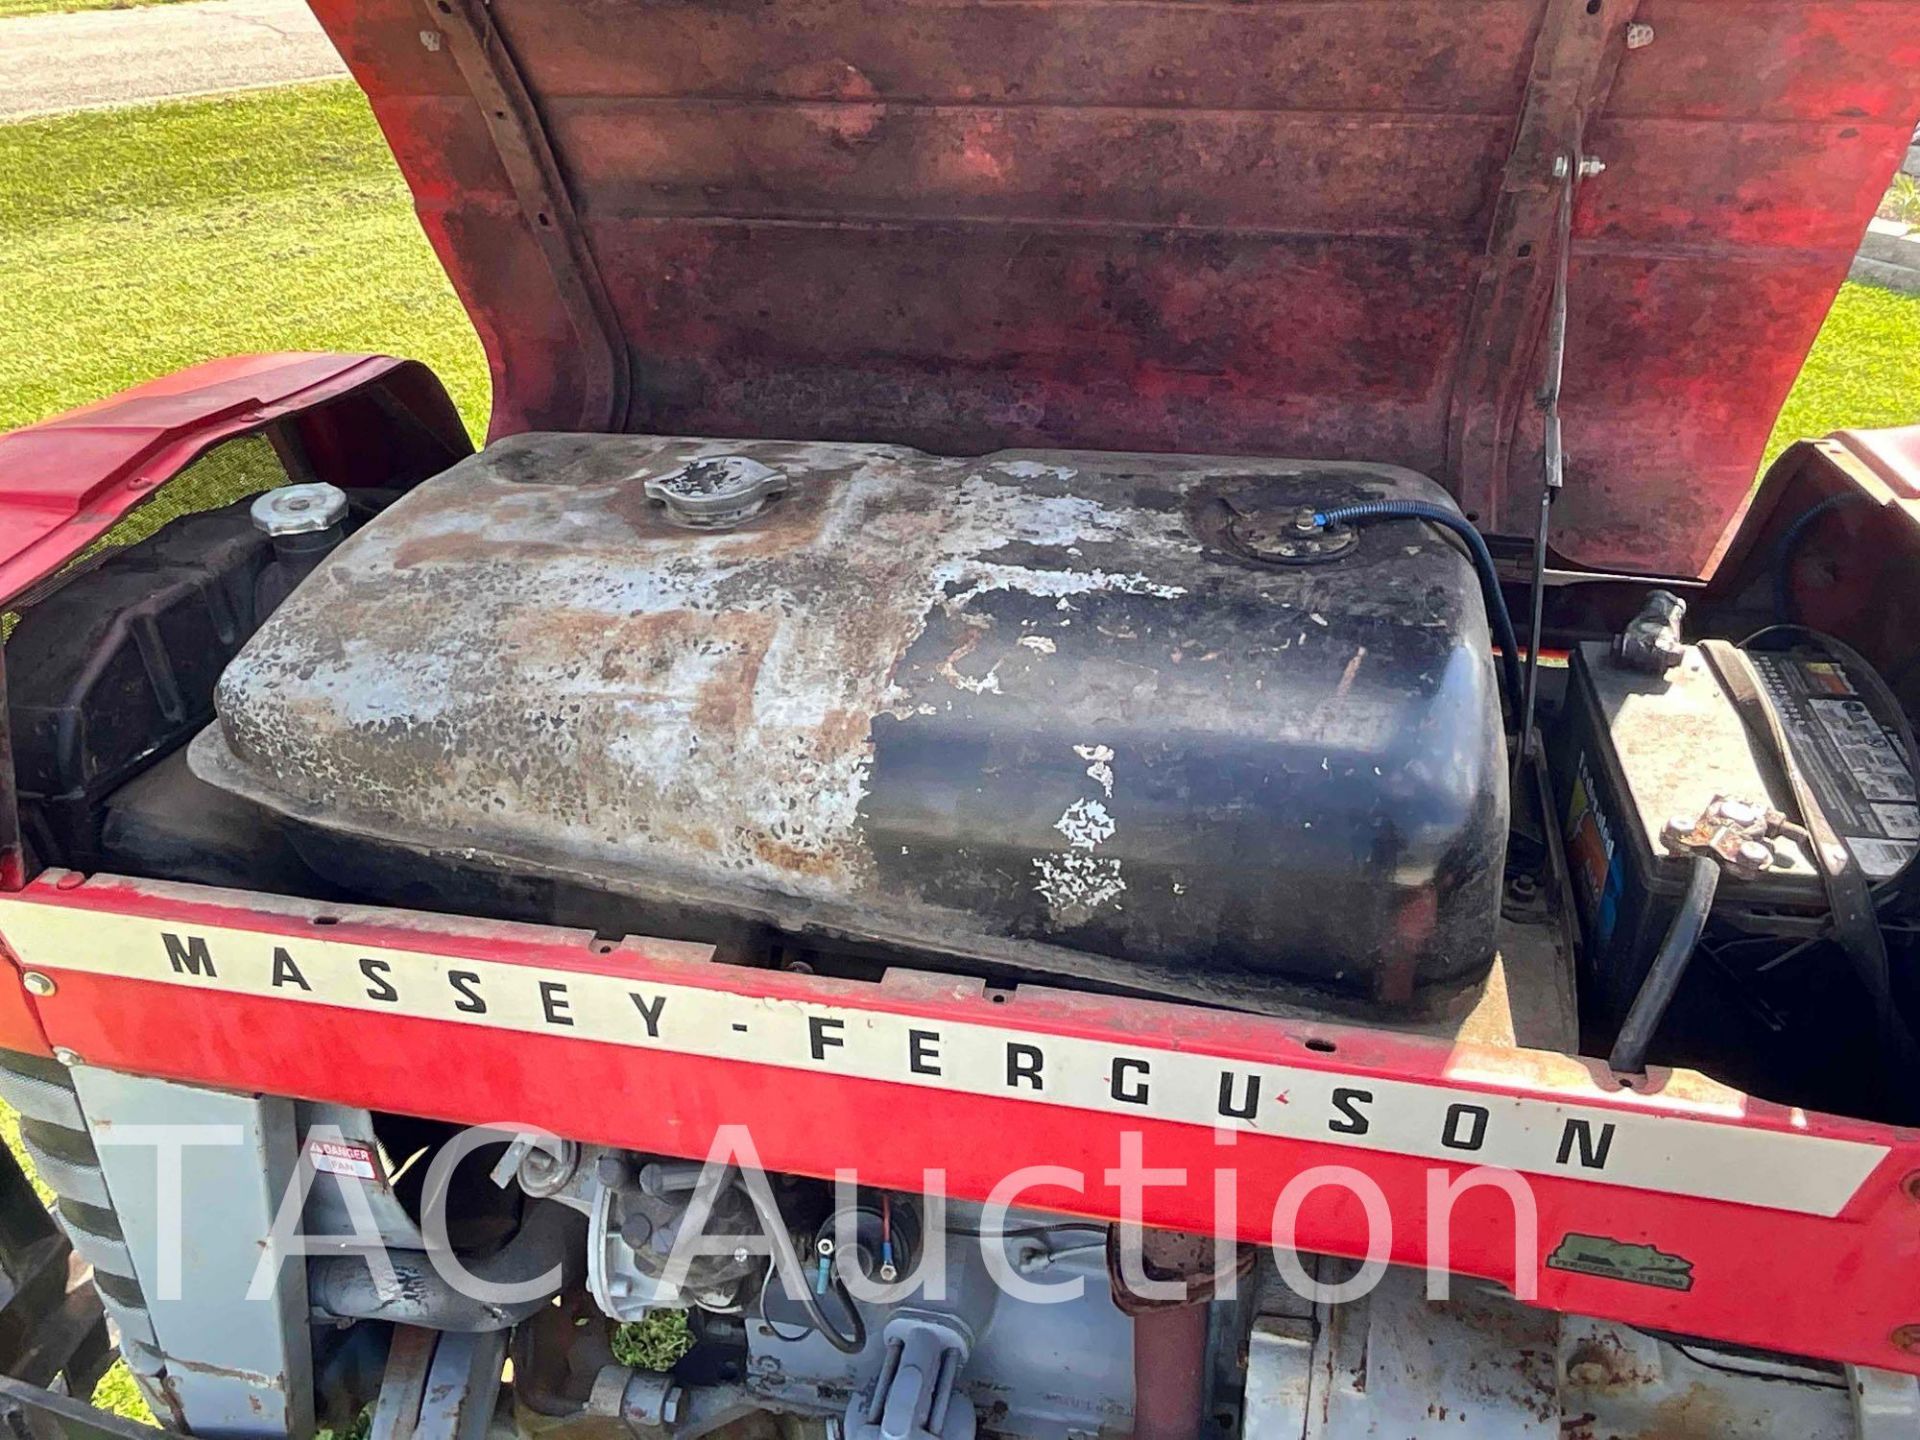 Massey Ferguson 135 Utility Tractor - Image 10 of 36